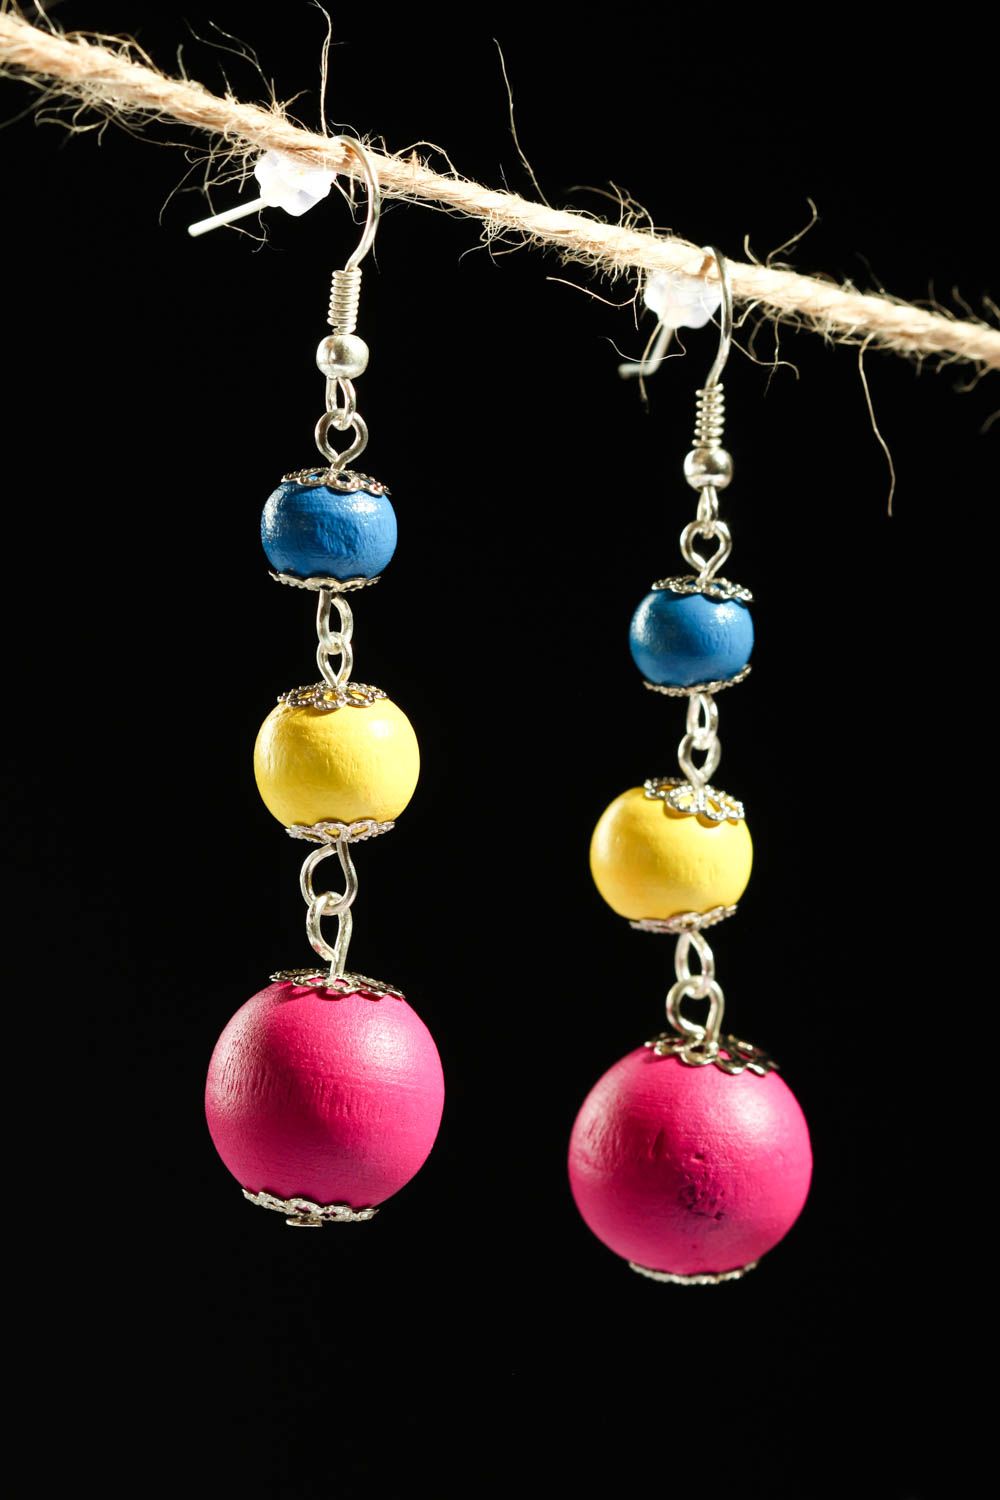 Handmade wooden earrings colorful earrings wooden accessories fashion jewlery photo 1